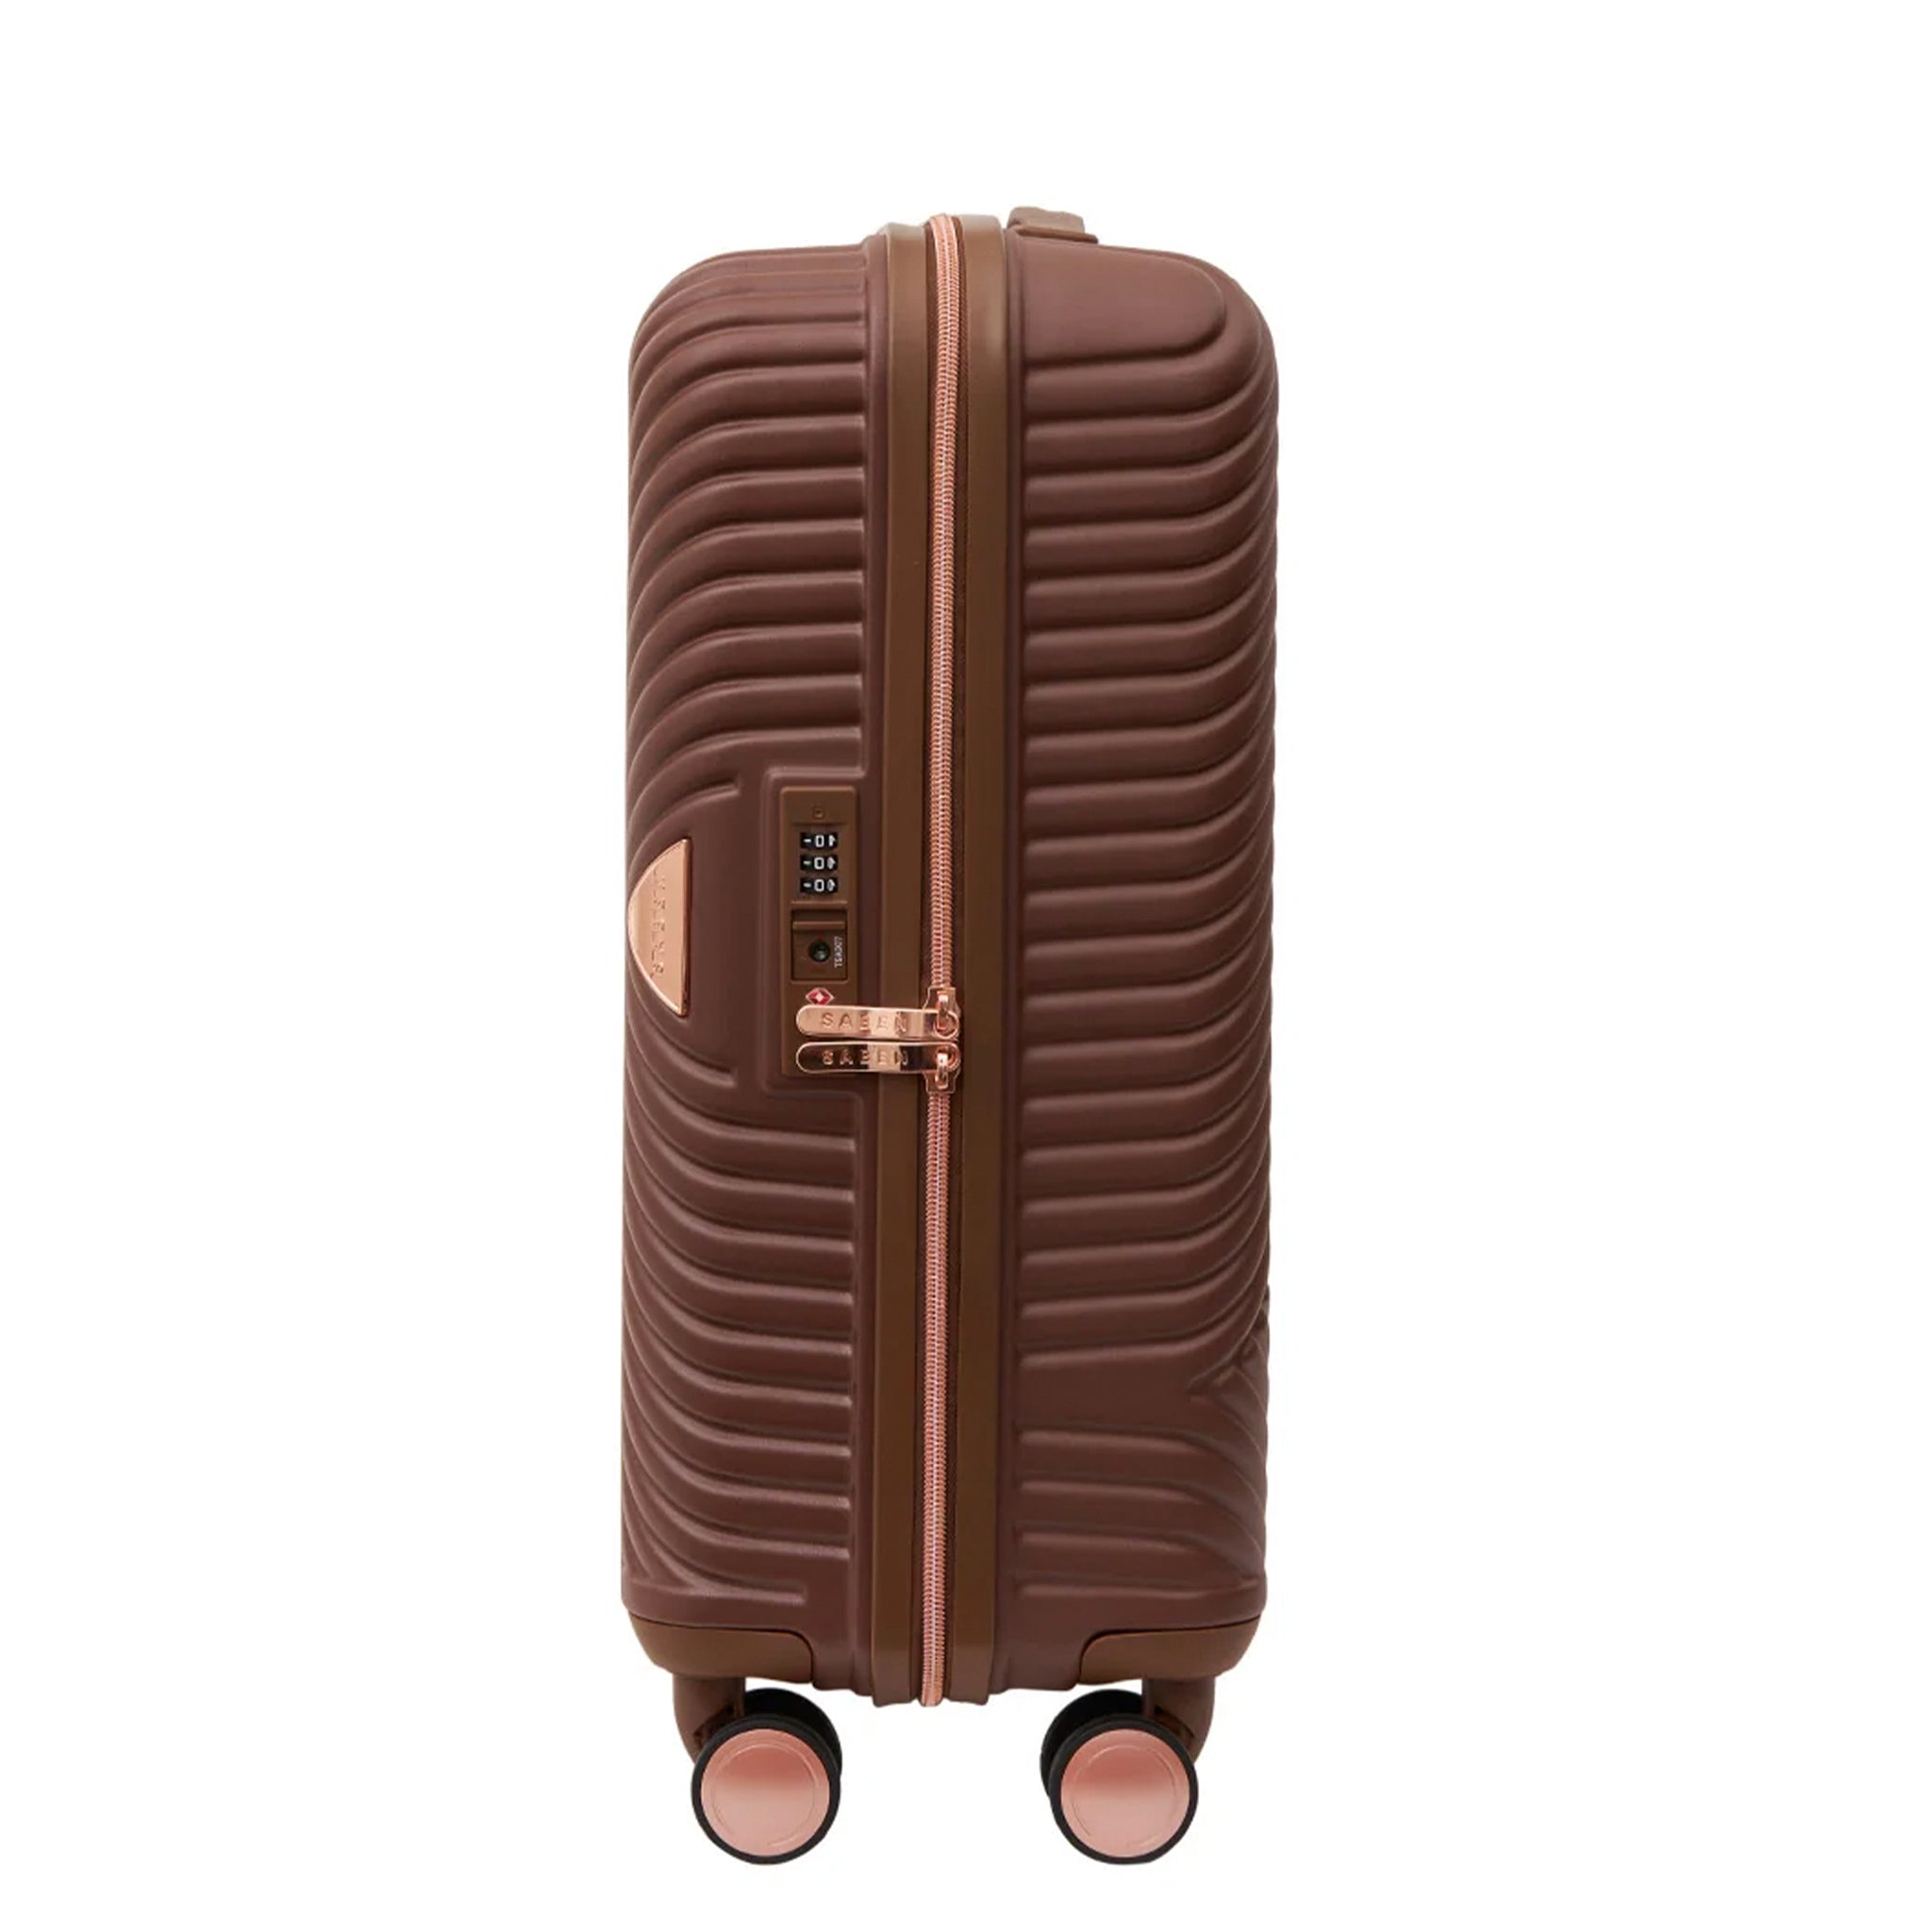 Saben Suitcase Set of Cabin & Medium - Nutshell